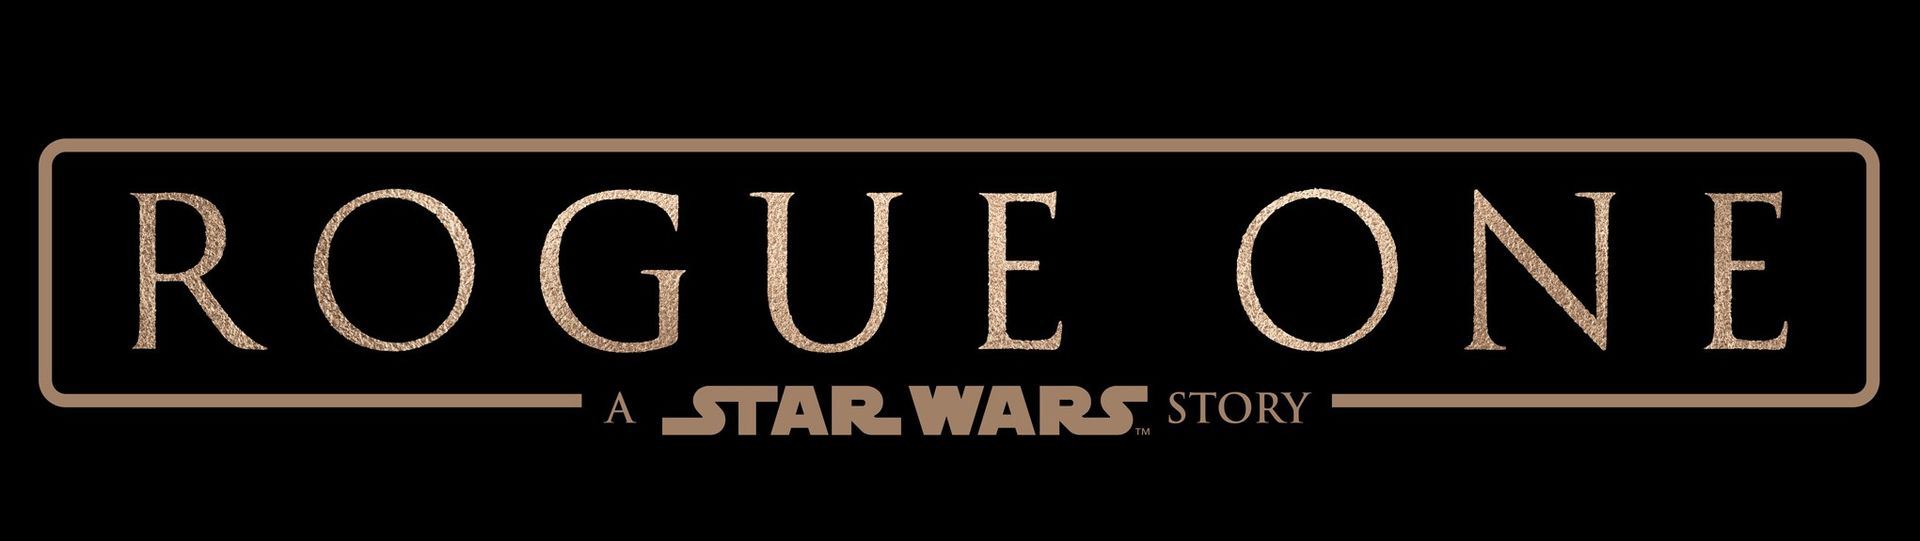 Star Wars Rogue One Logo